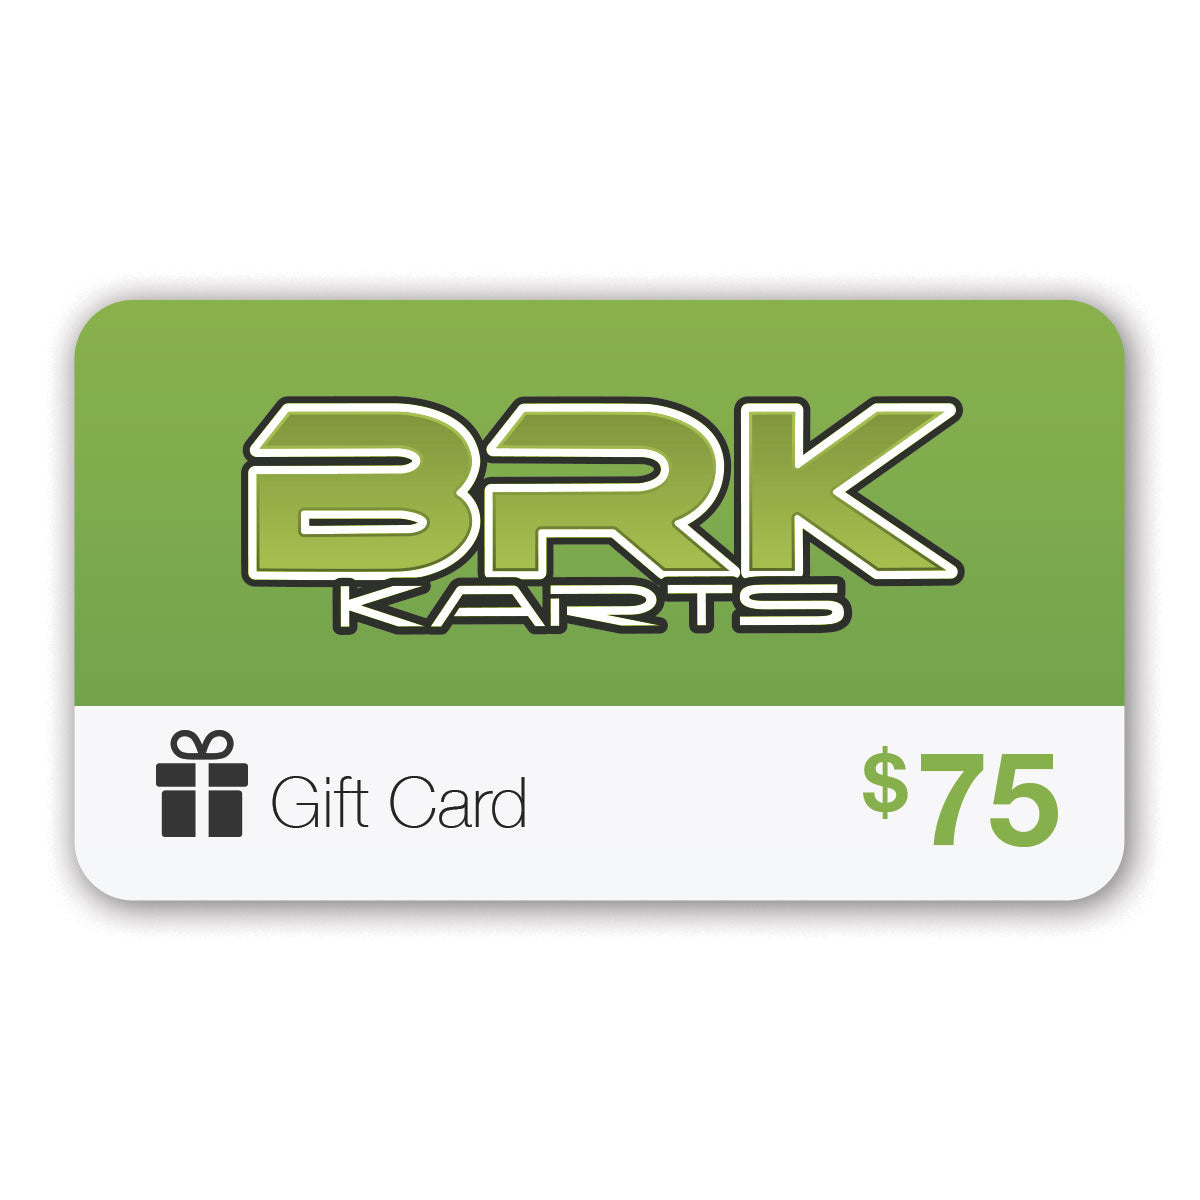 BRK Karts Gift Card - $75